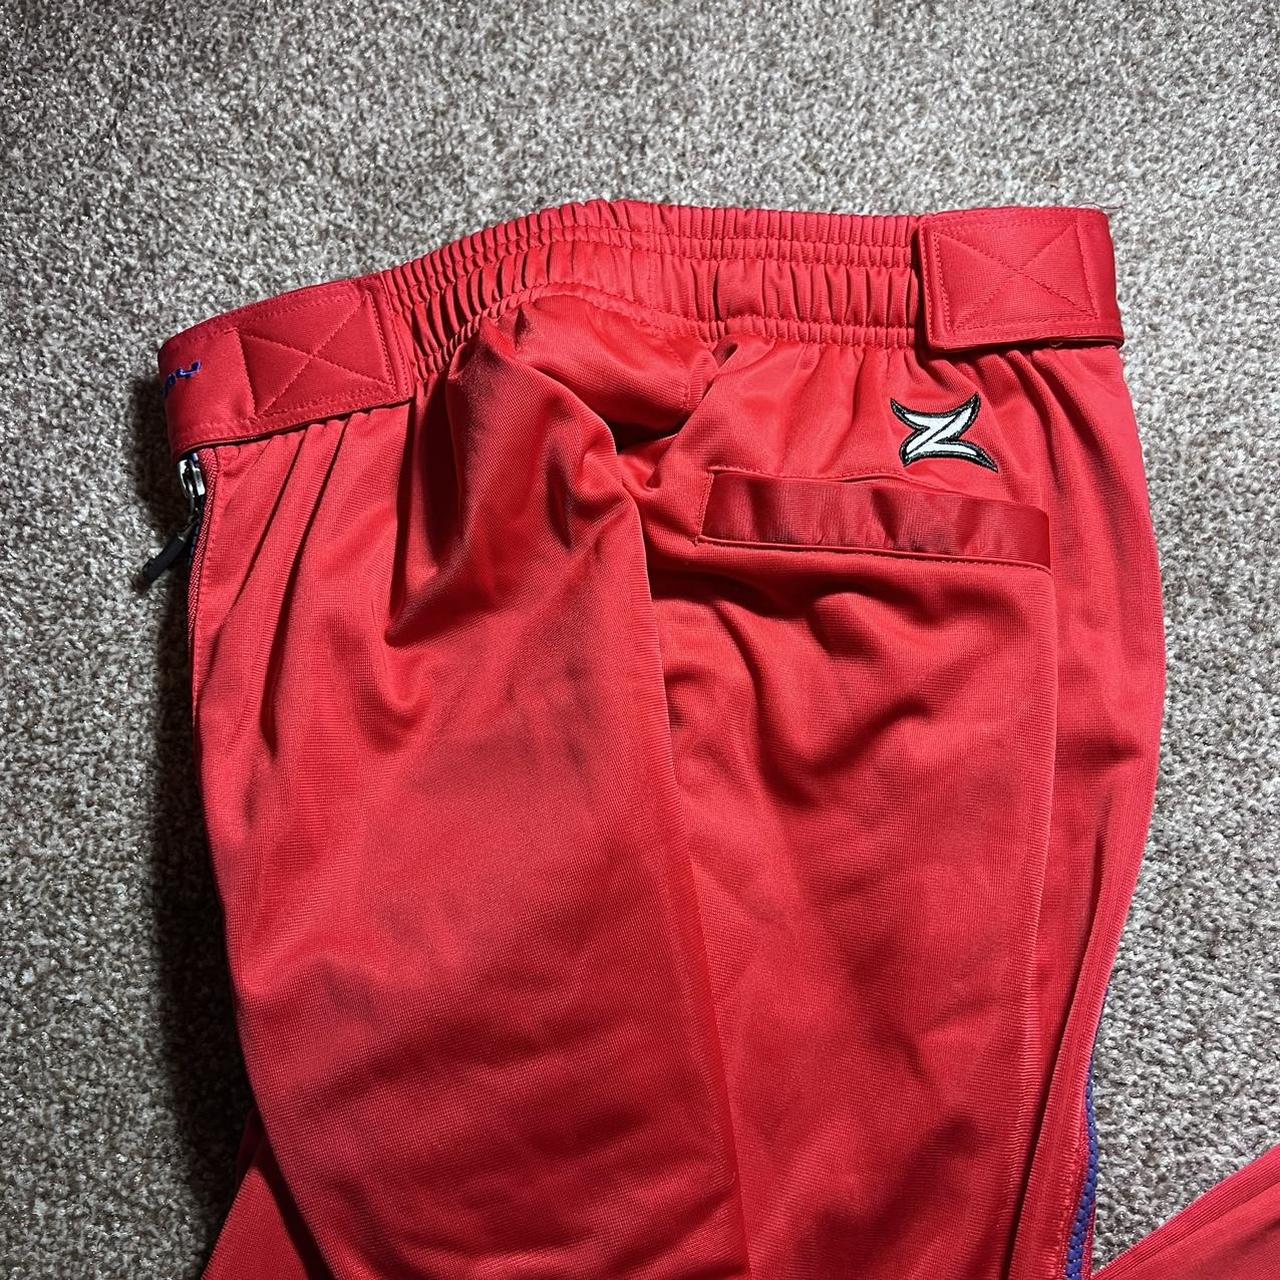 NBA Red Striped Zip-Up Warmup Pants, Fits Men's - Depop